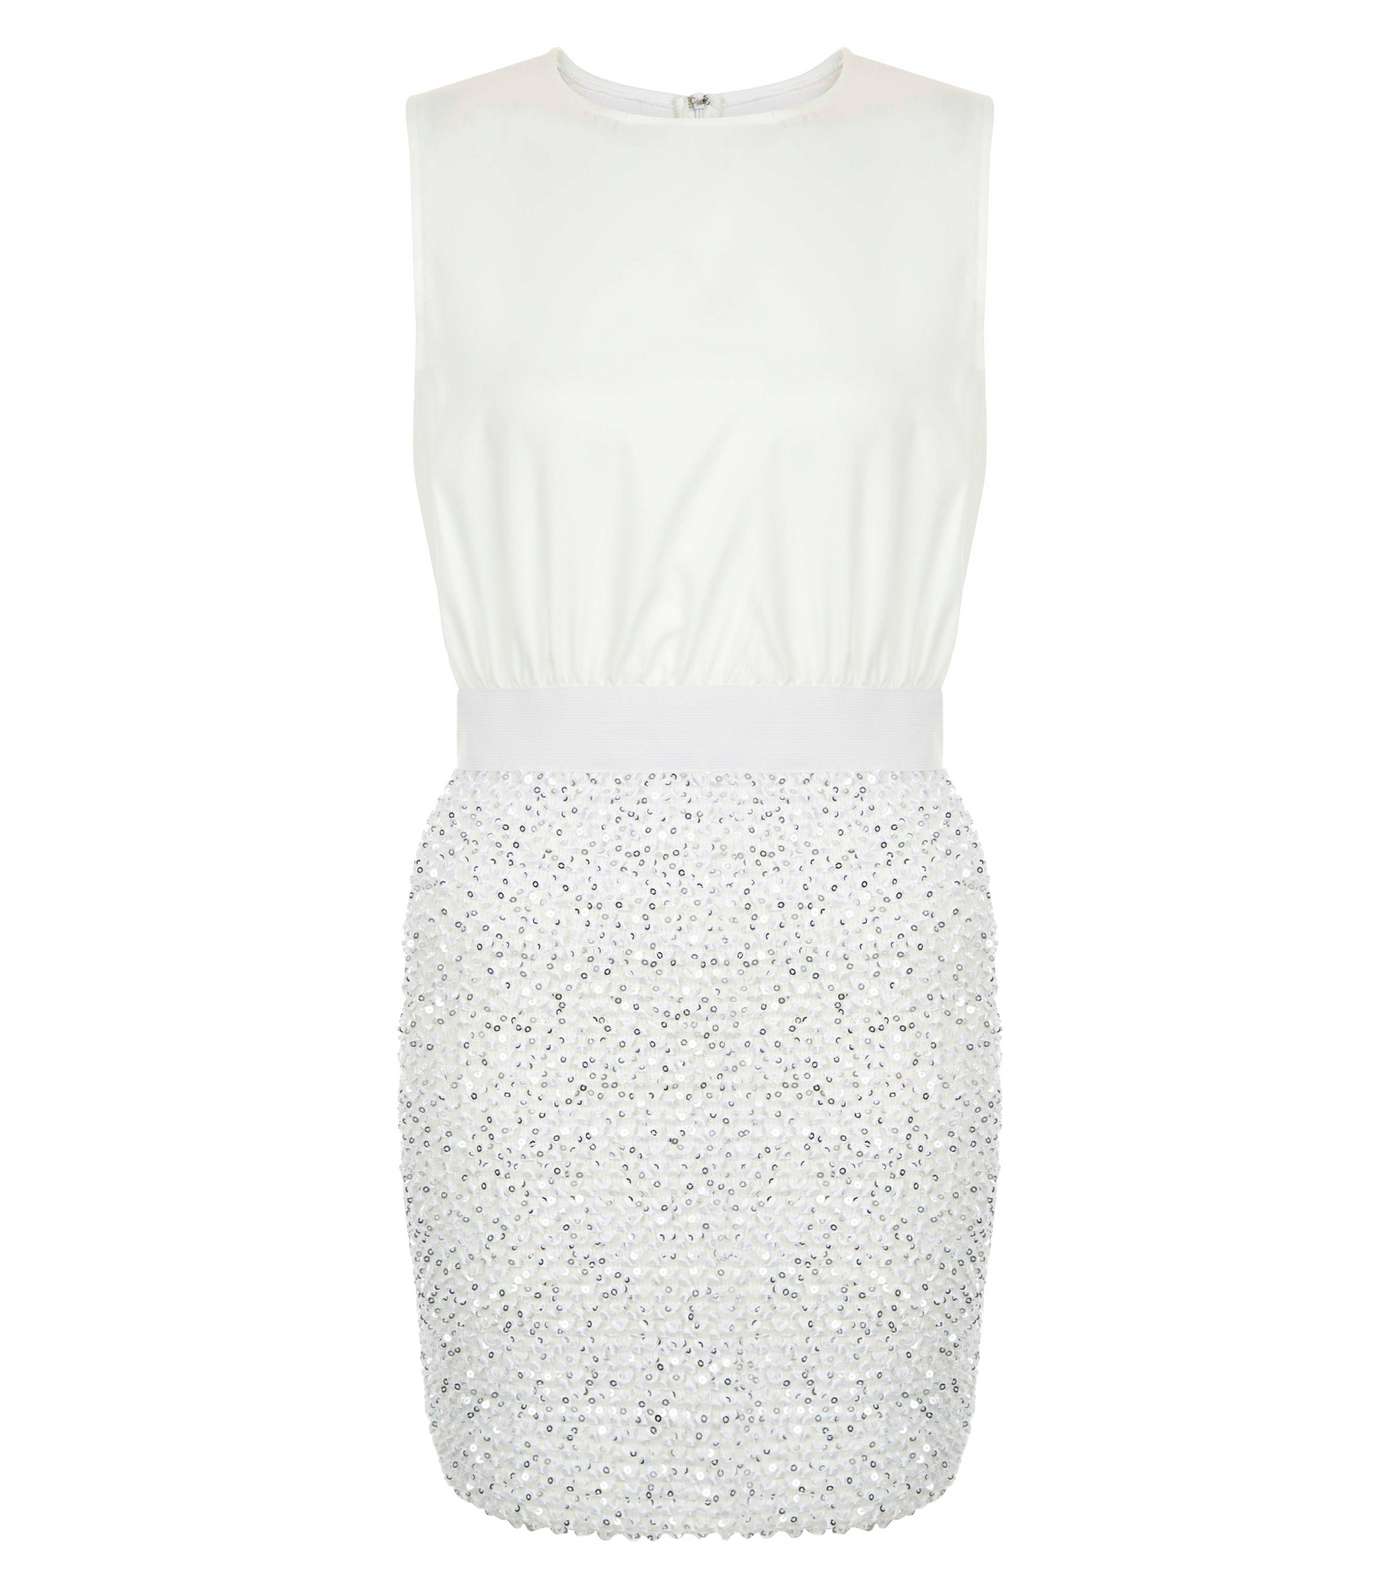 AX Paris White Sequin Skirt 2 in 1 Dress Image 4